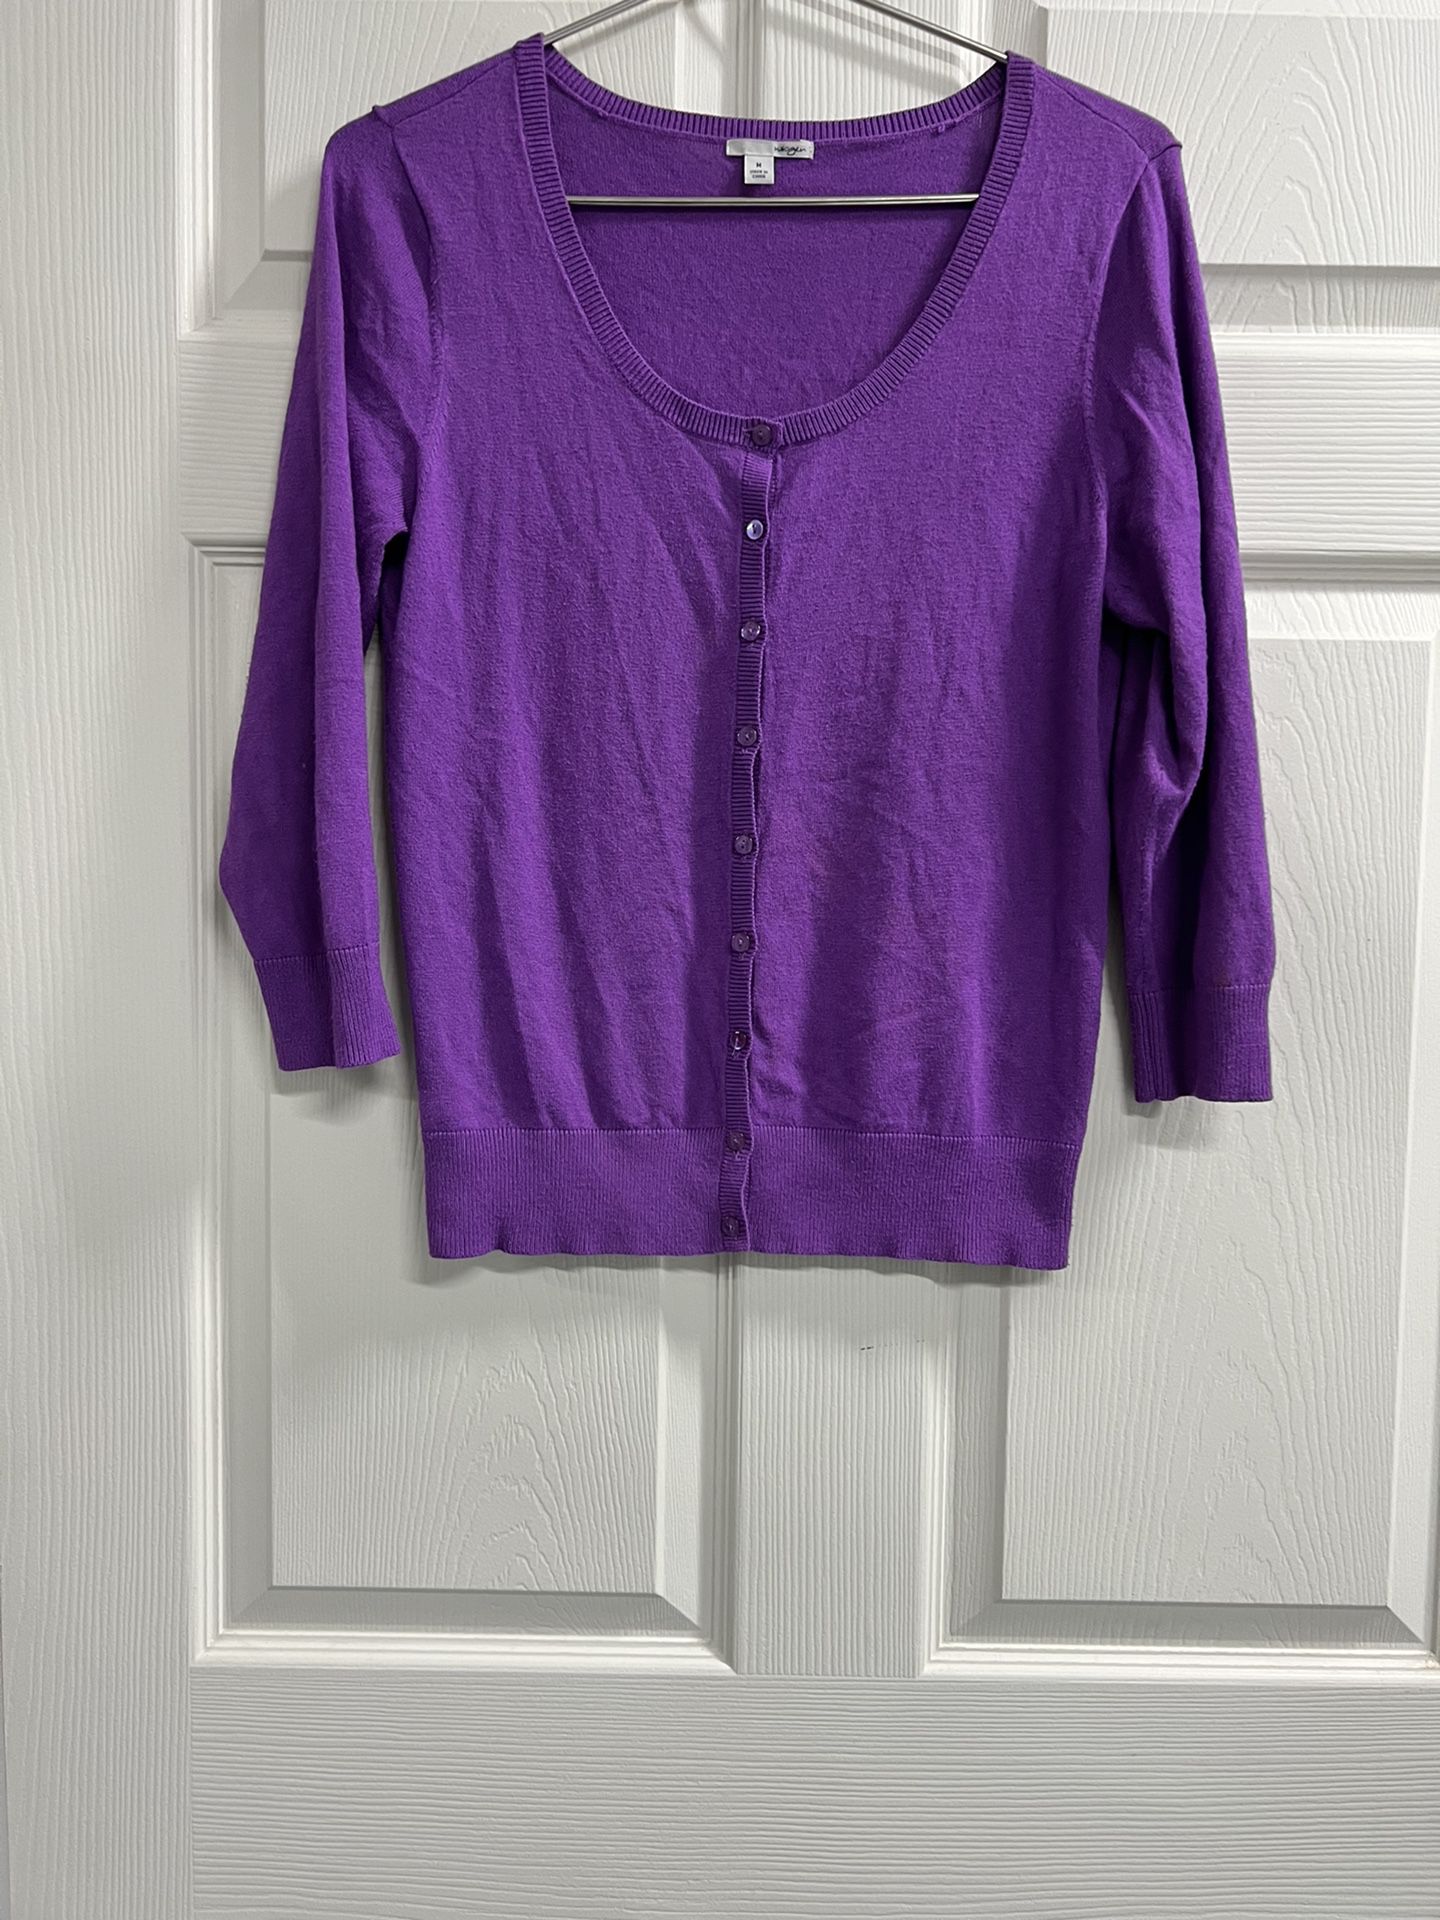 Halogen Purple Long Sleeve Cardigan Sweater - Size Medium - GUC